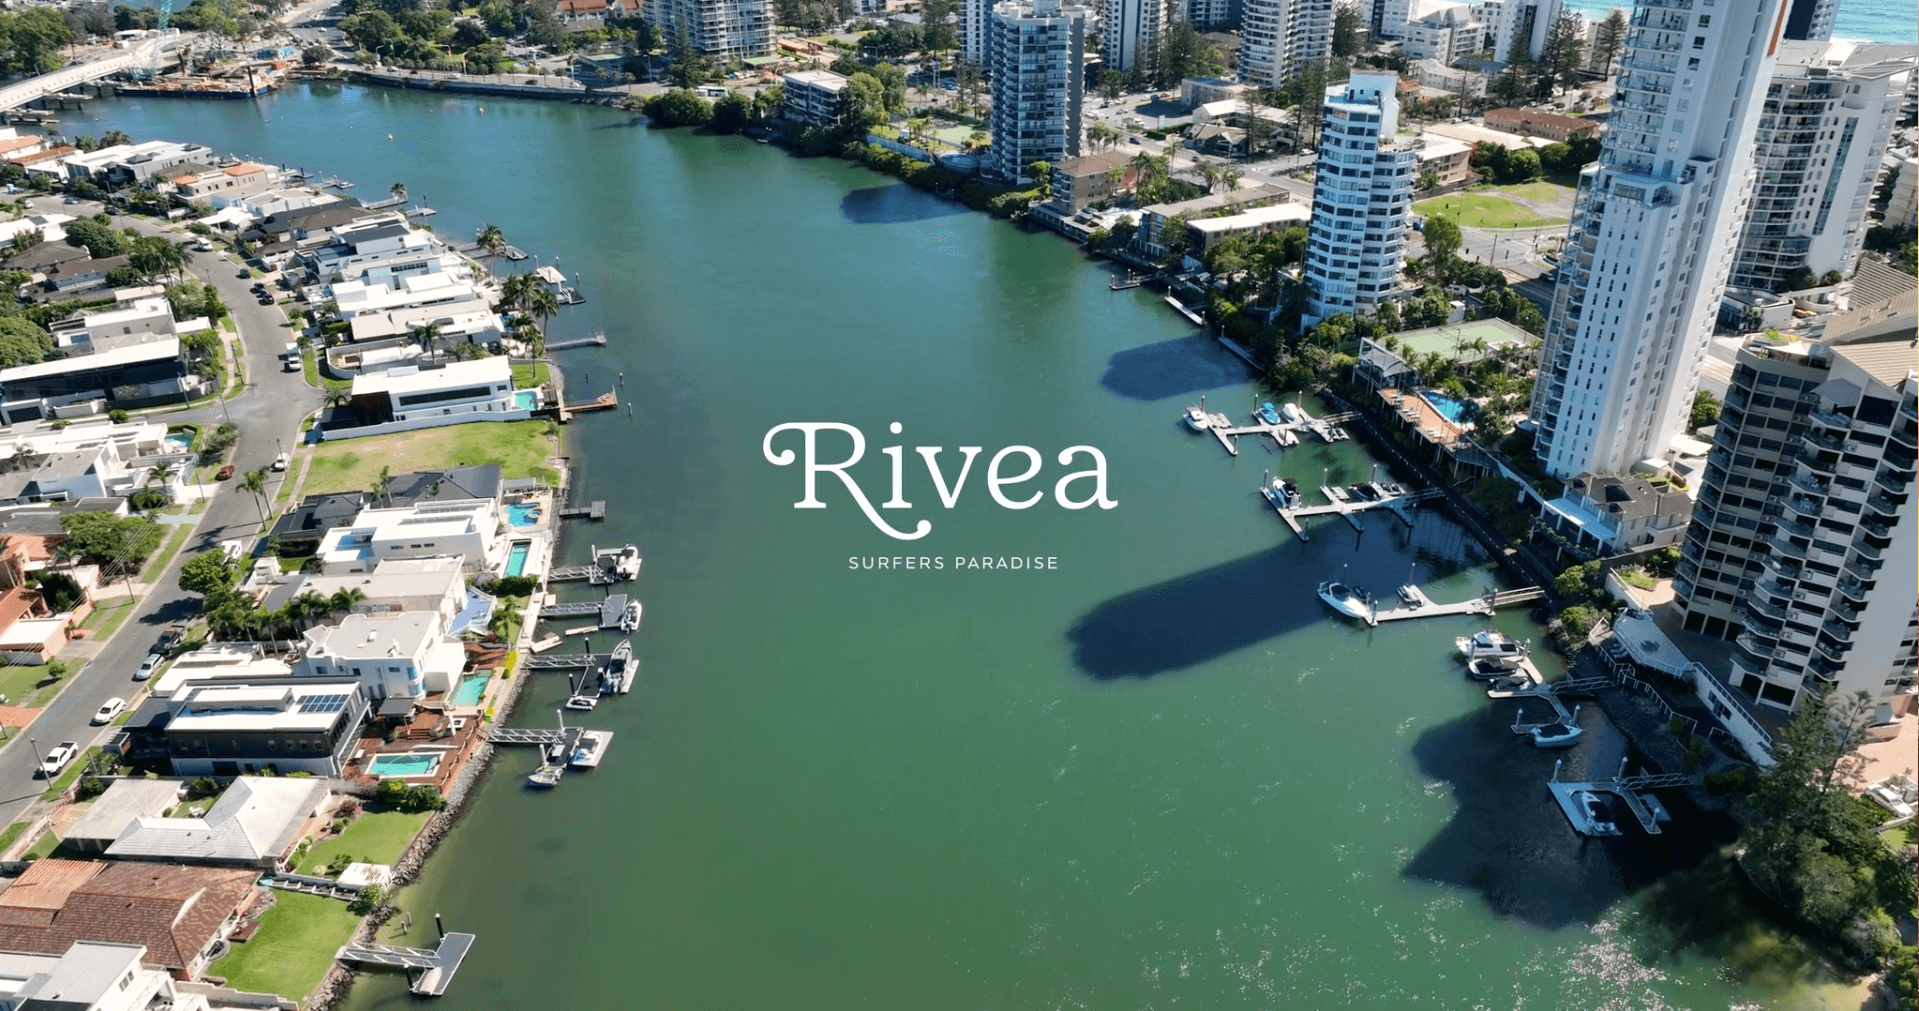 Rivea – Where the river meets the sea